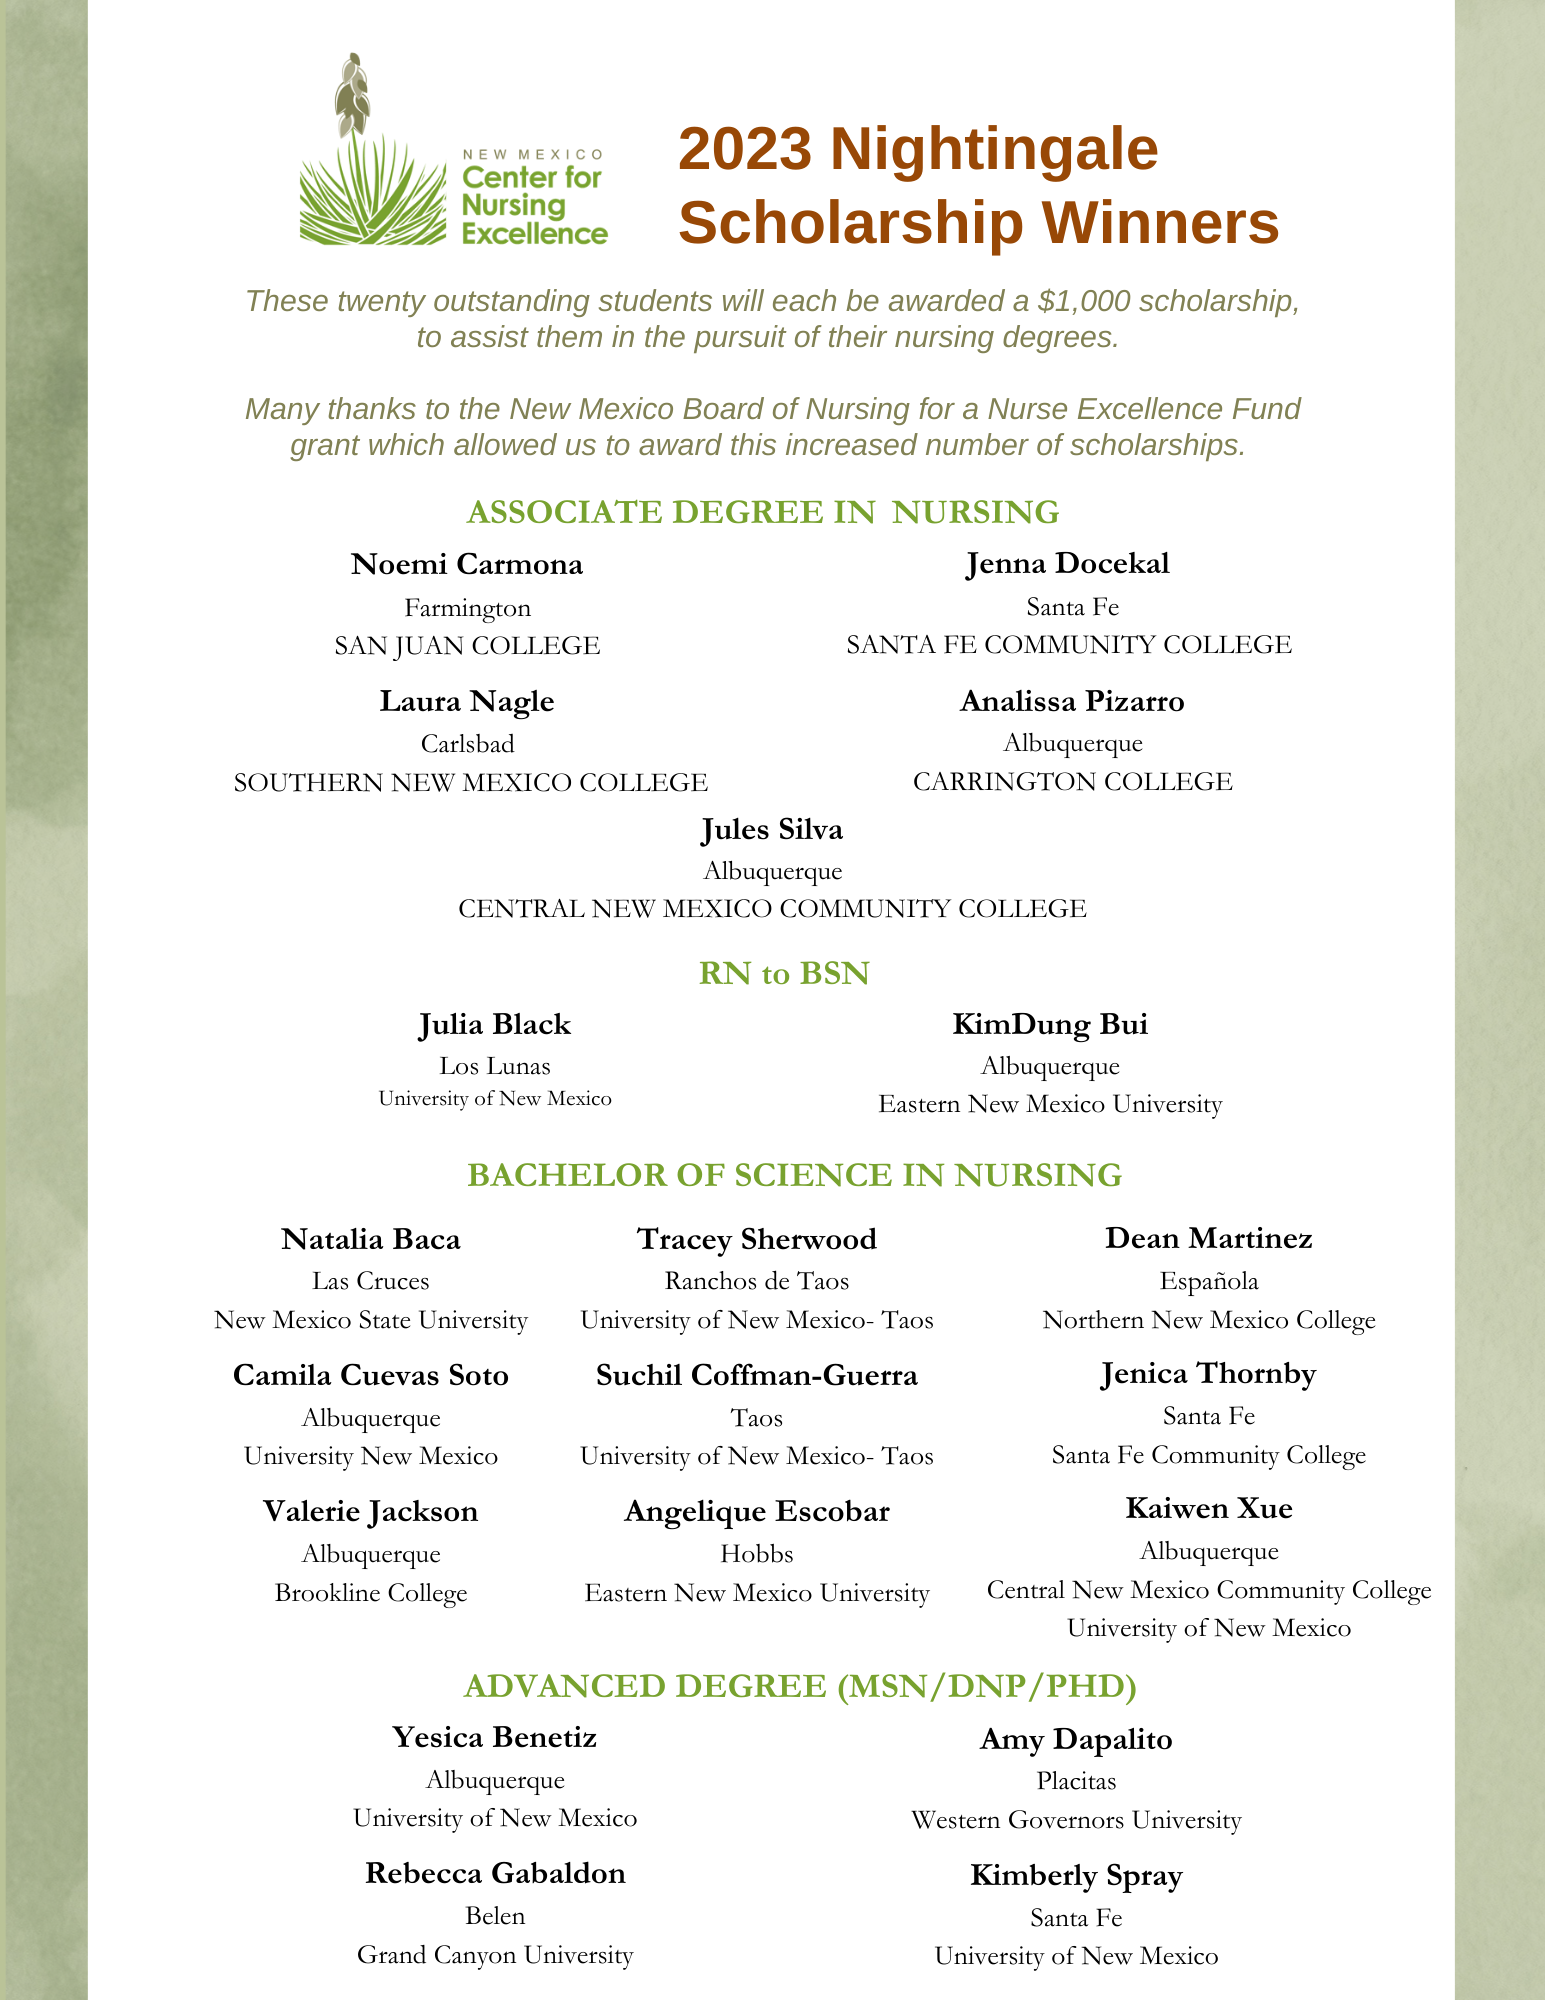 2023 Nightingale Scholarship Recipients